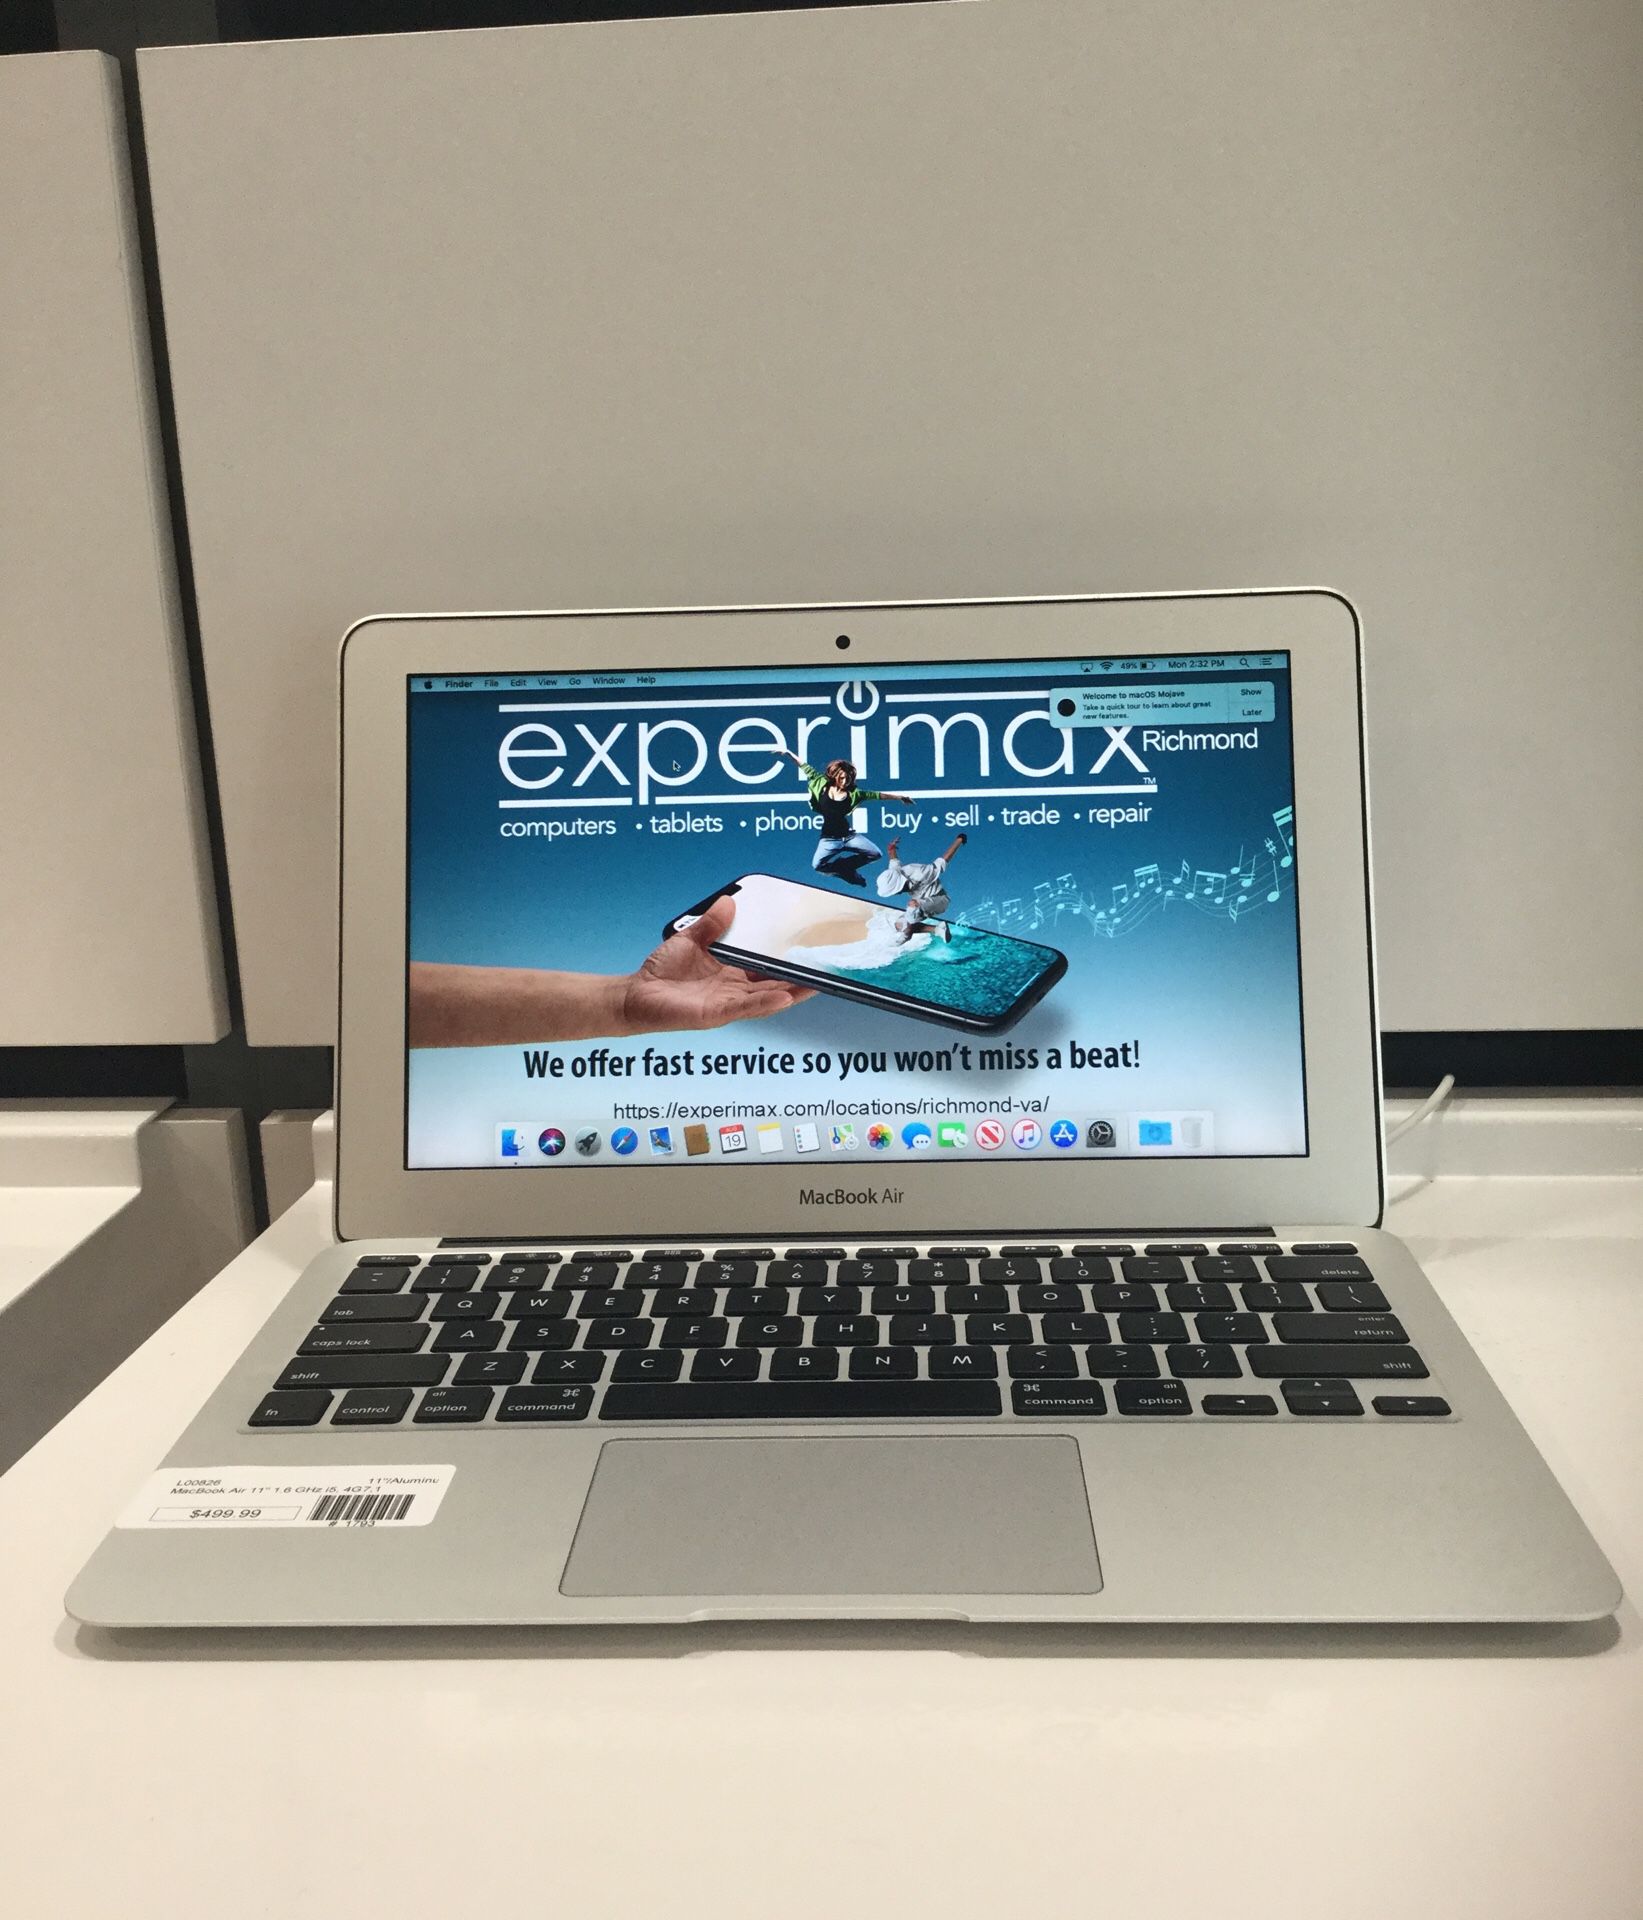 MacBook Air 11” 1.6GHz i5, 4GB